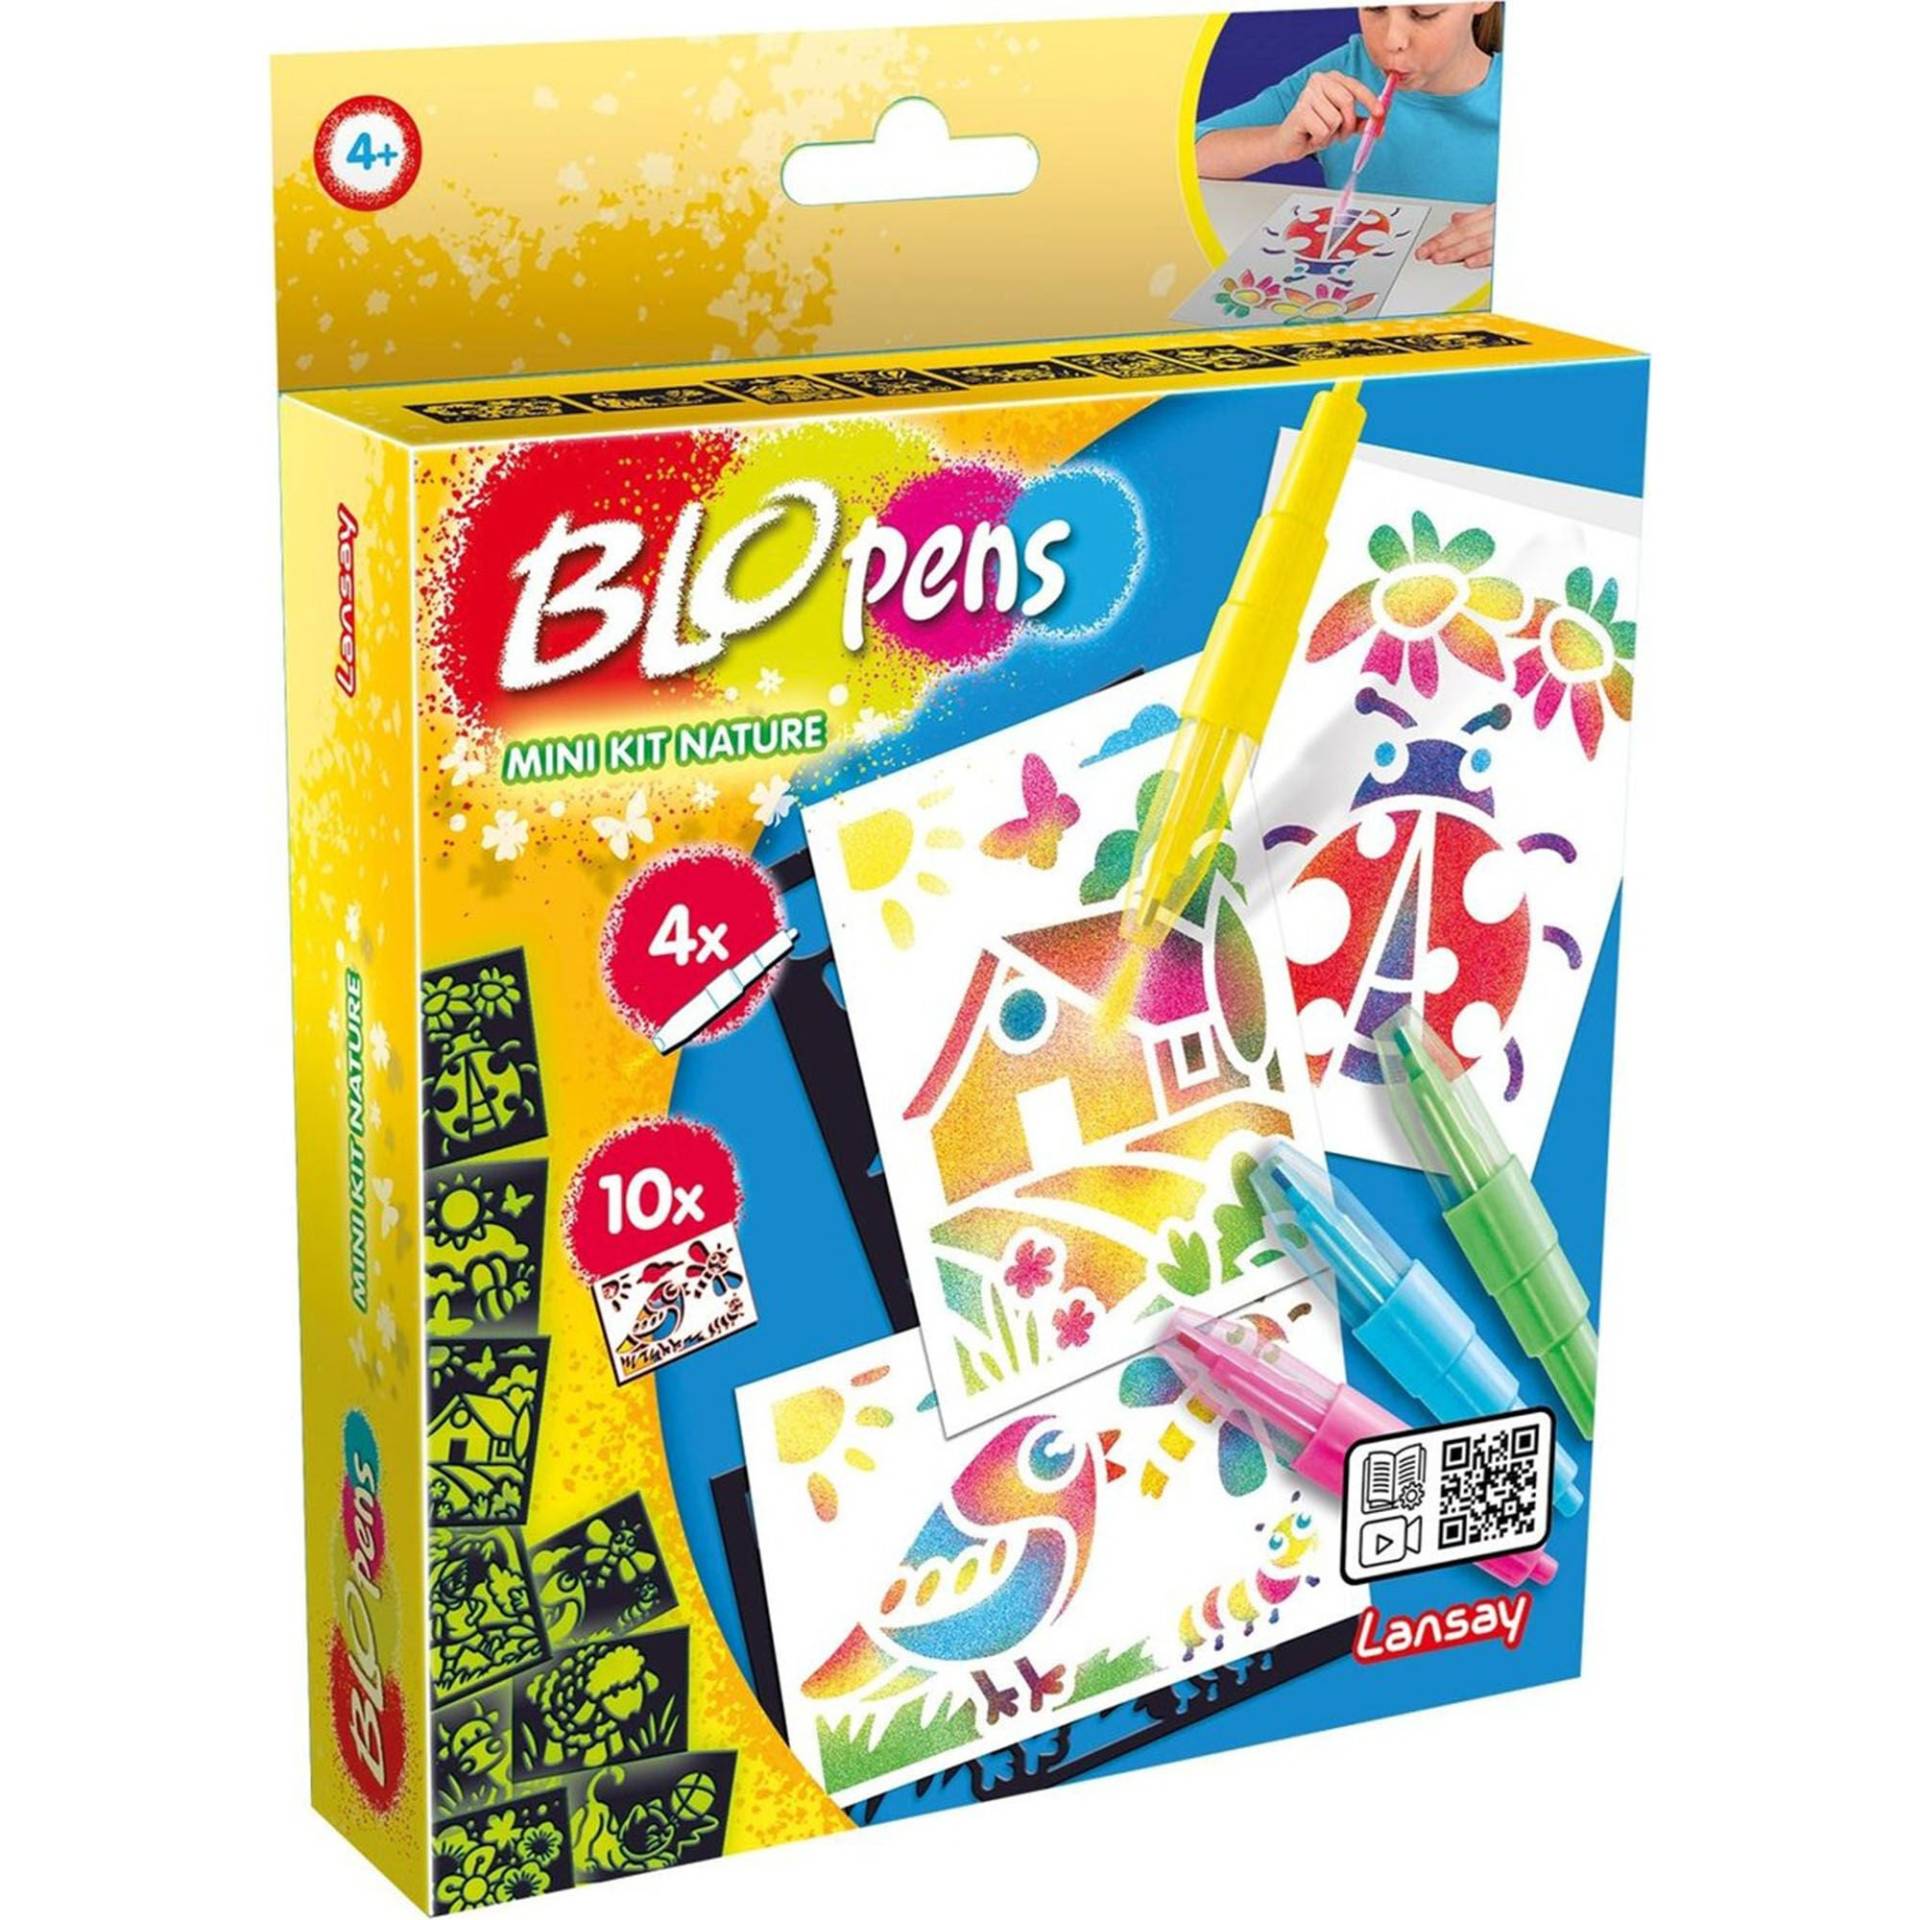 BloPens Mini Kit Pustestifte 4er-Pack von Blo Pens